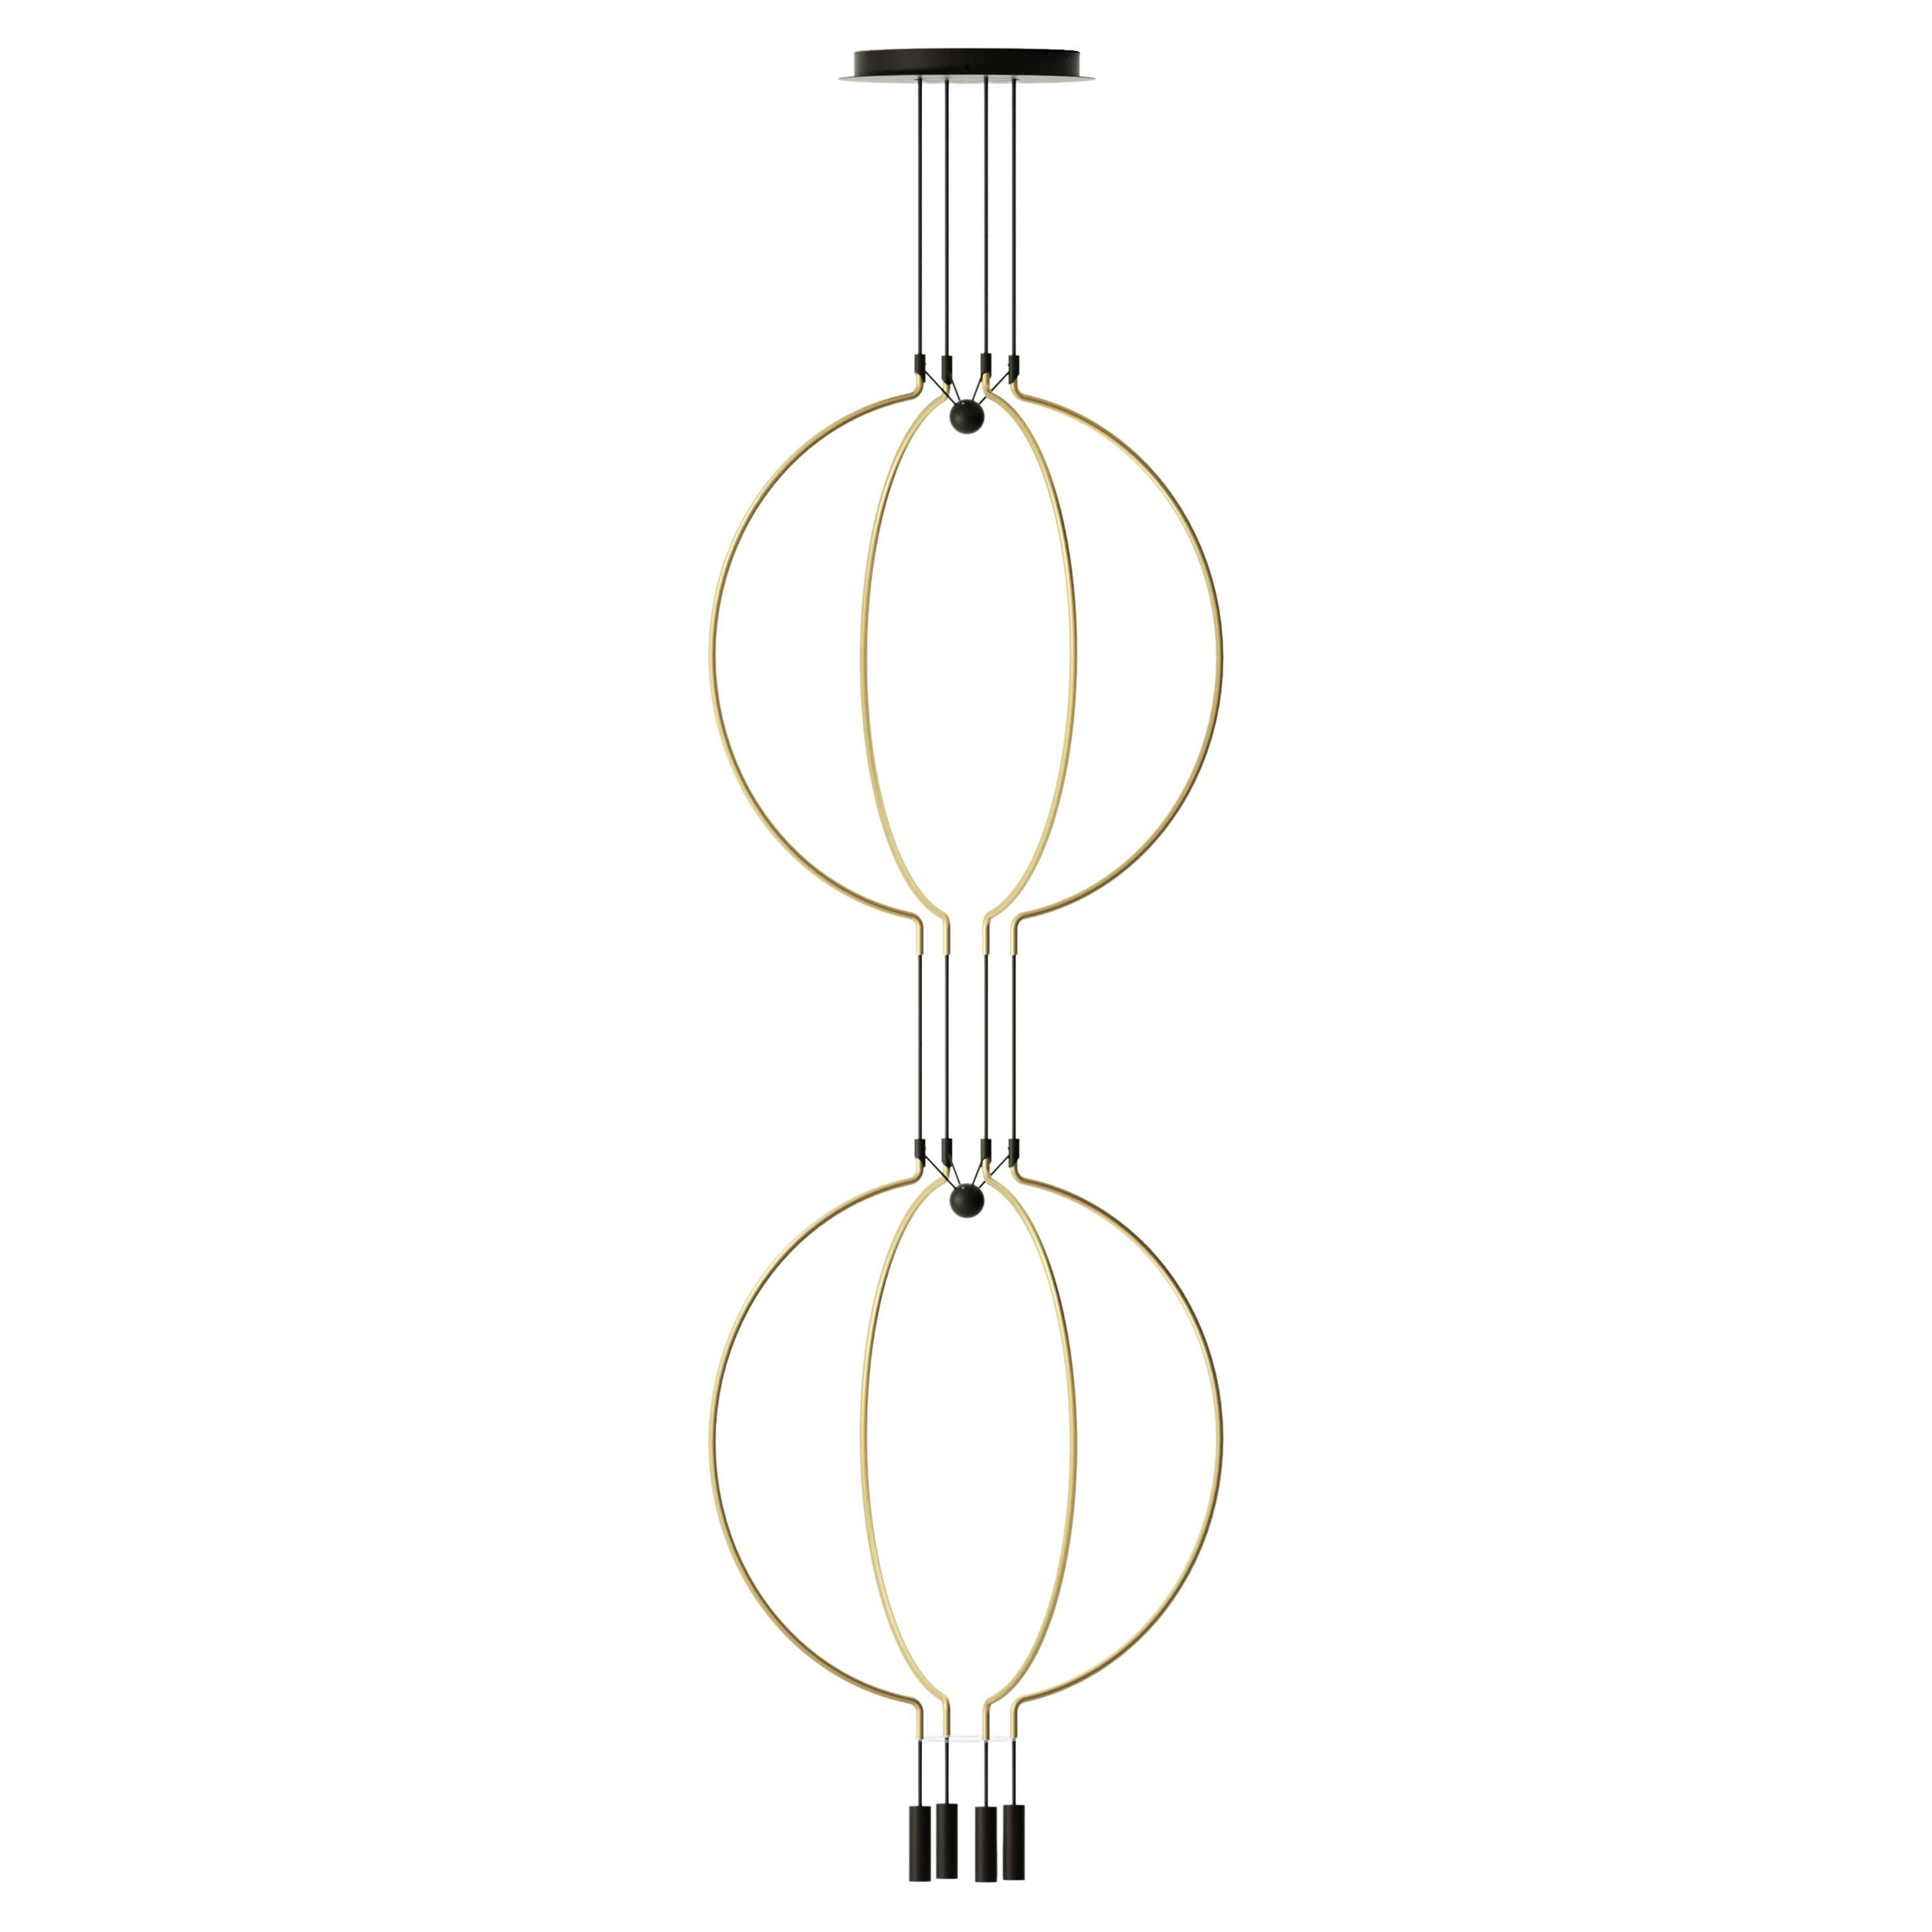 Axolight Liaison Model M4 Pendant Lamp in Gold/Black by Sara Moroni